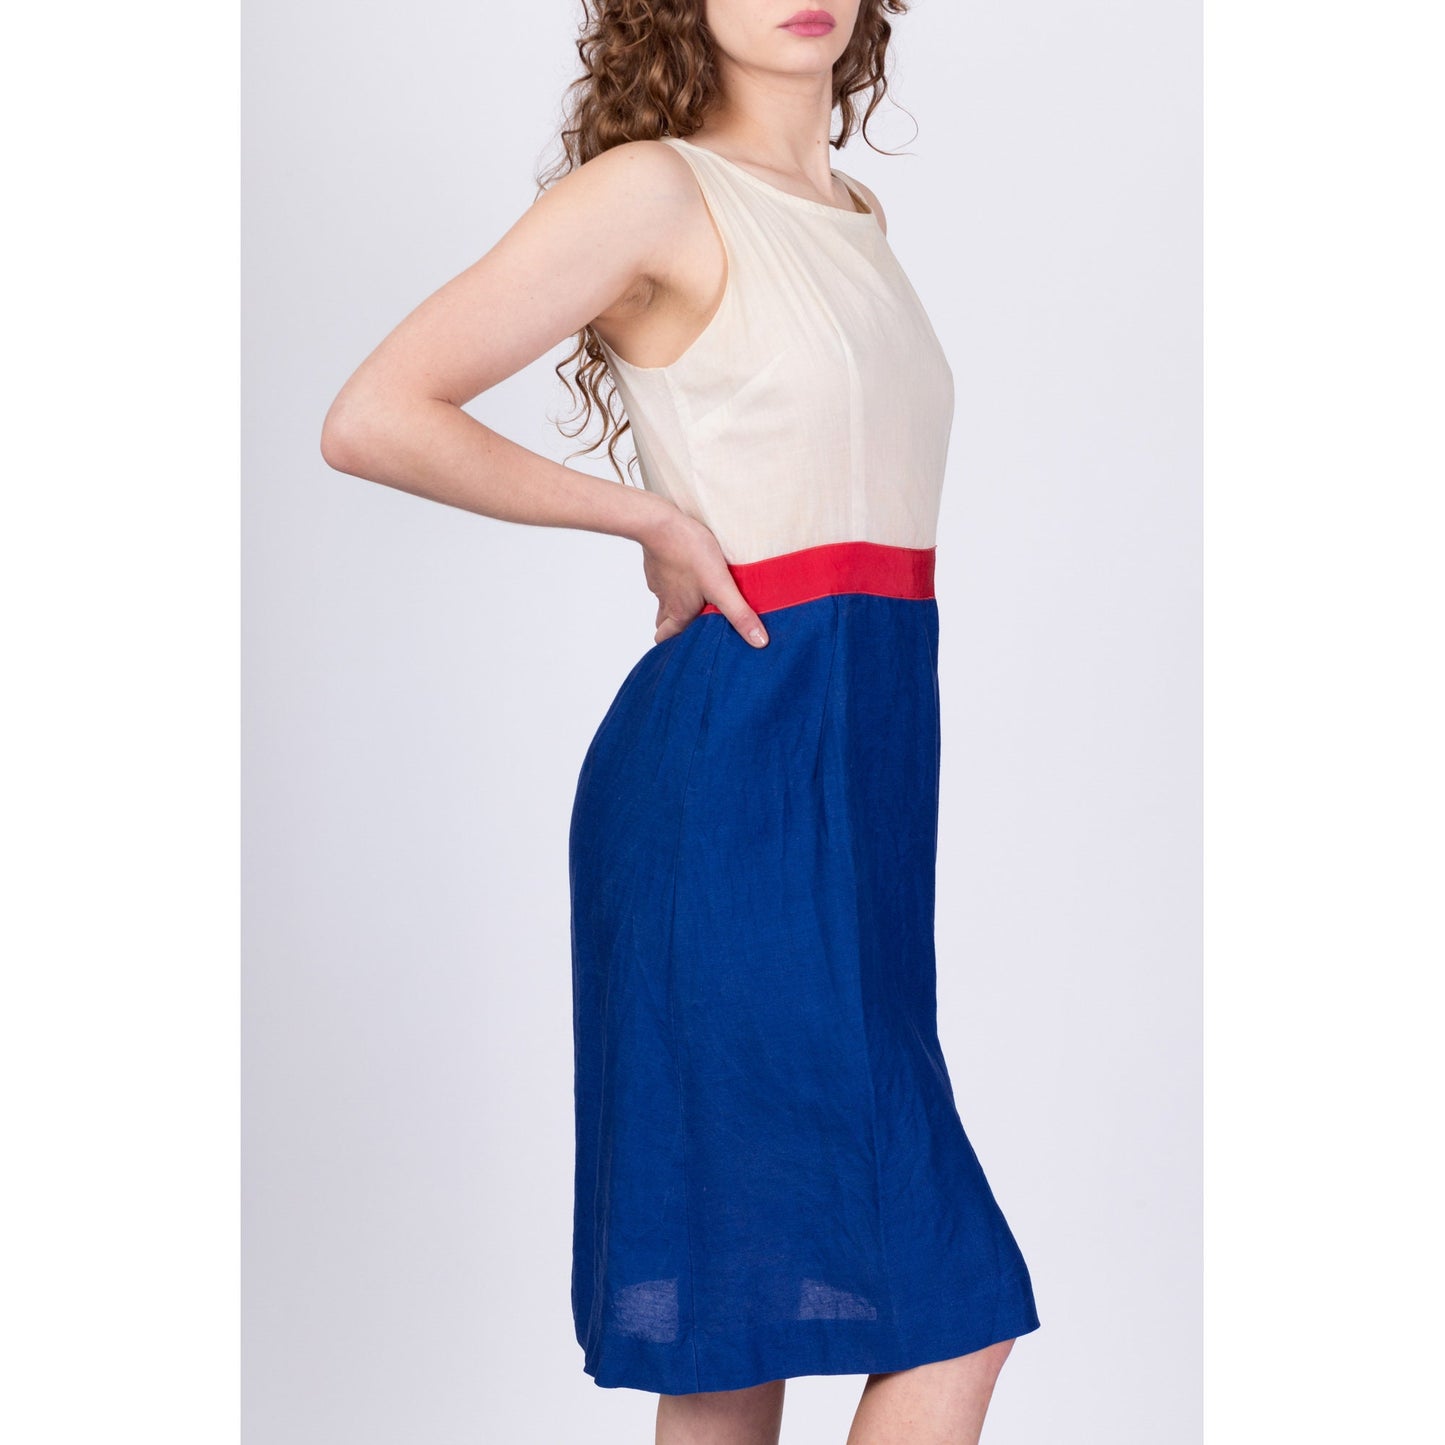 60s Sheer Bodice & Blue Skirt Midi Dress - Medium 